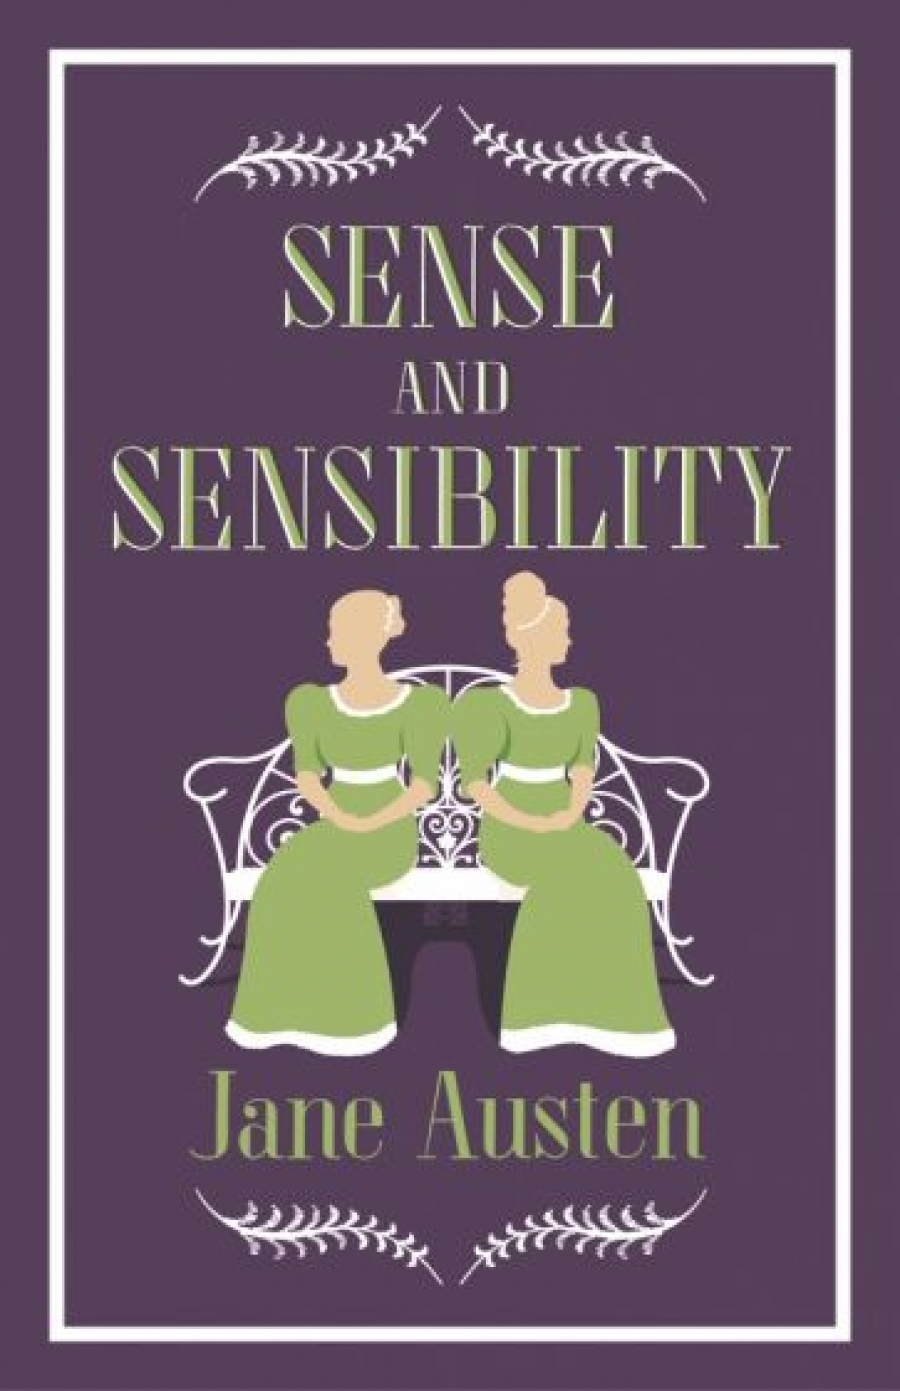 Jane Austen Sense and Sensibility 